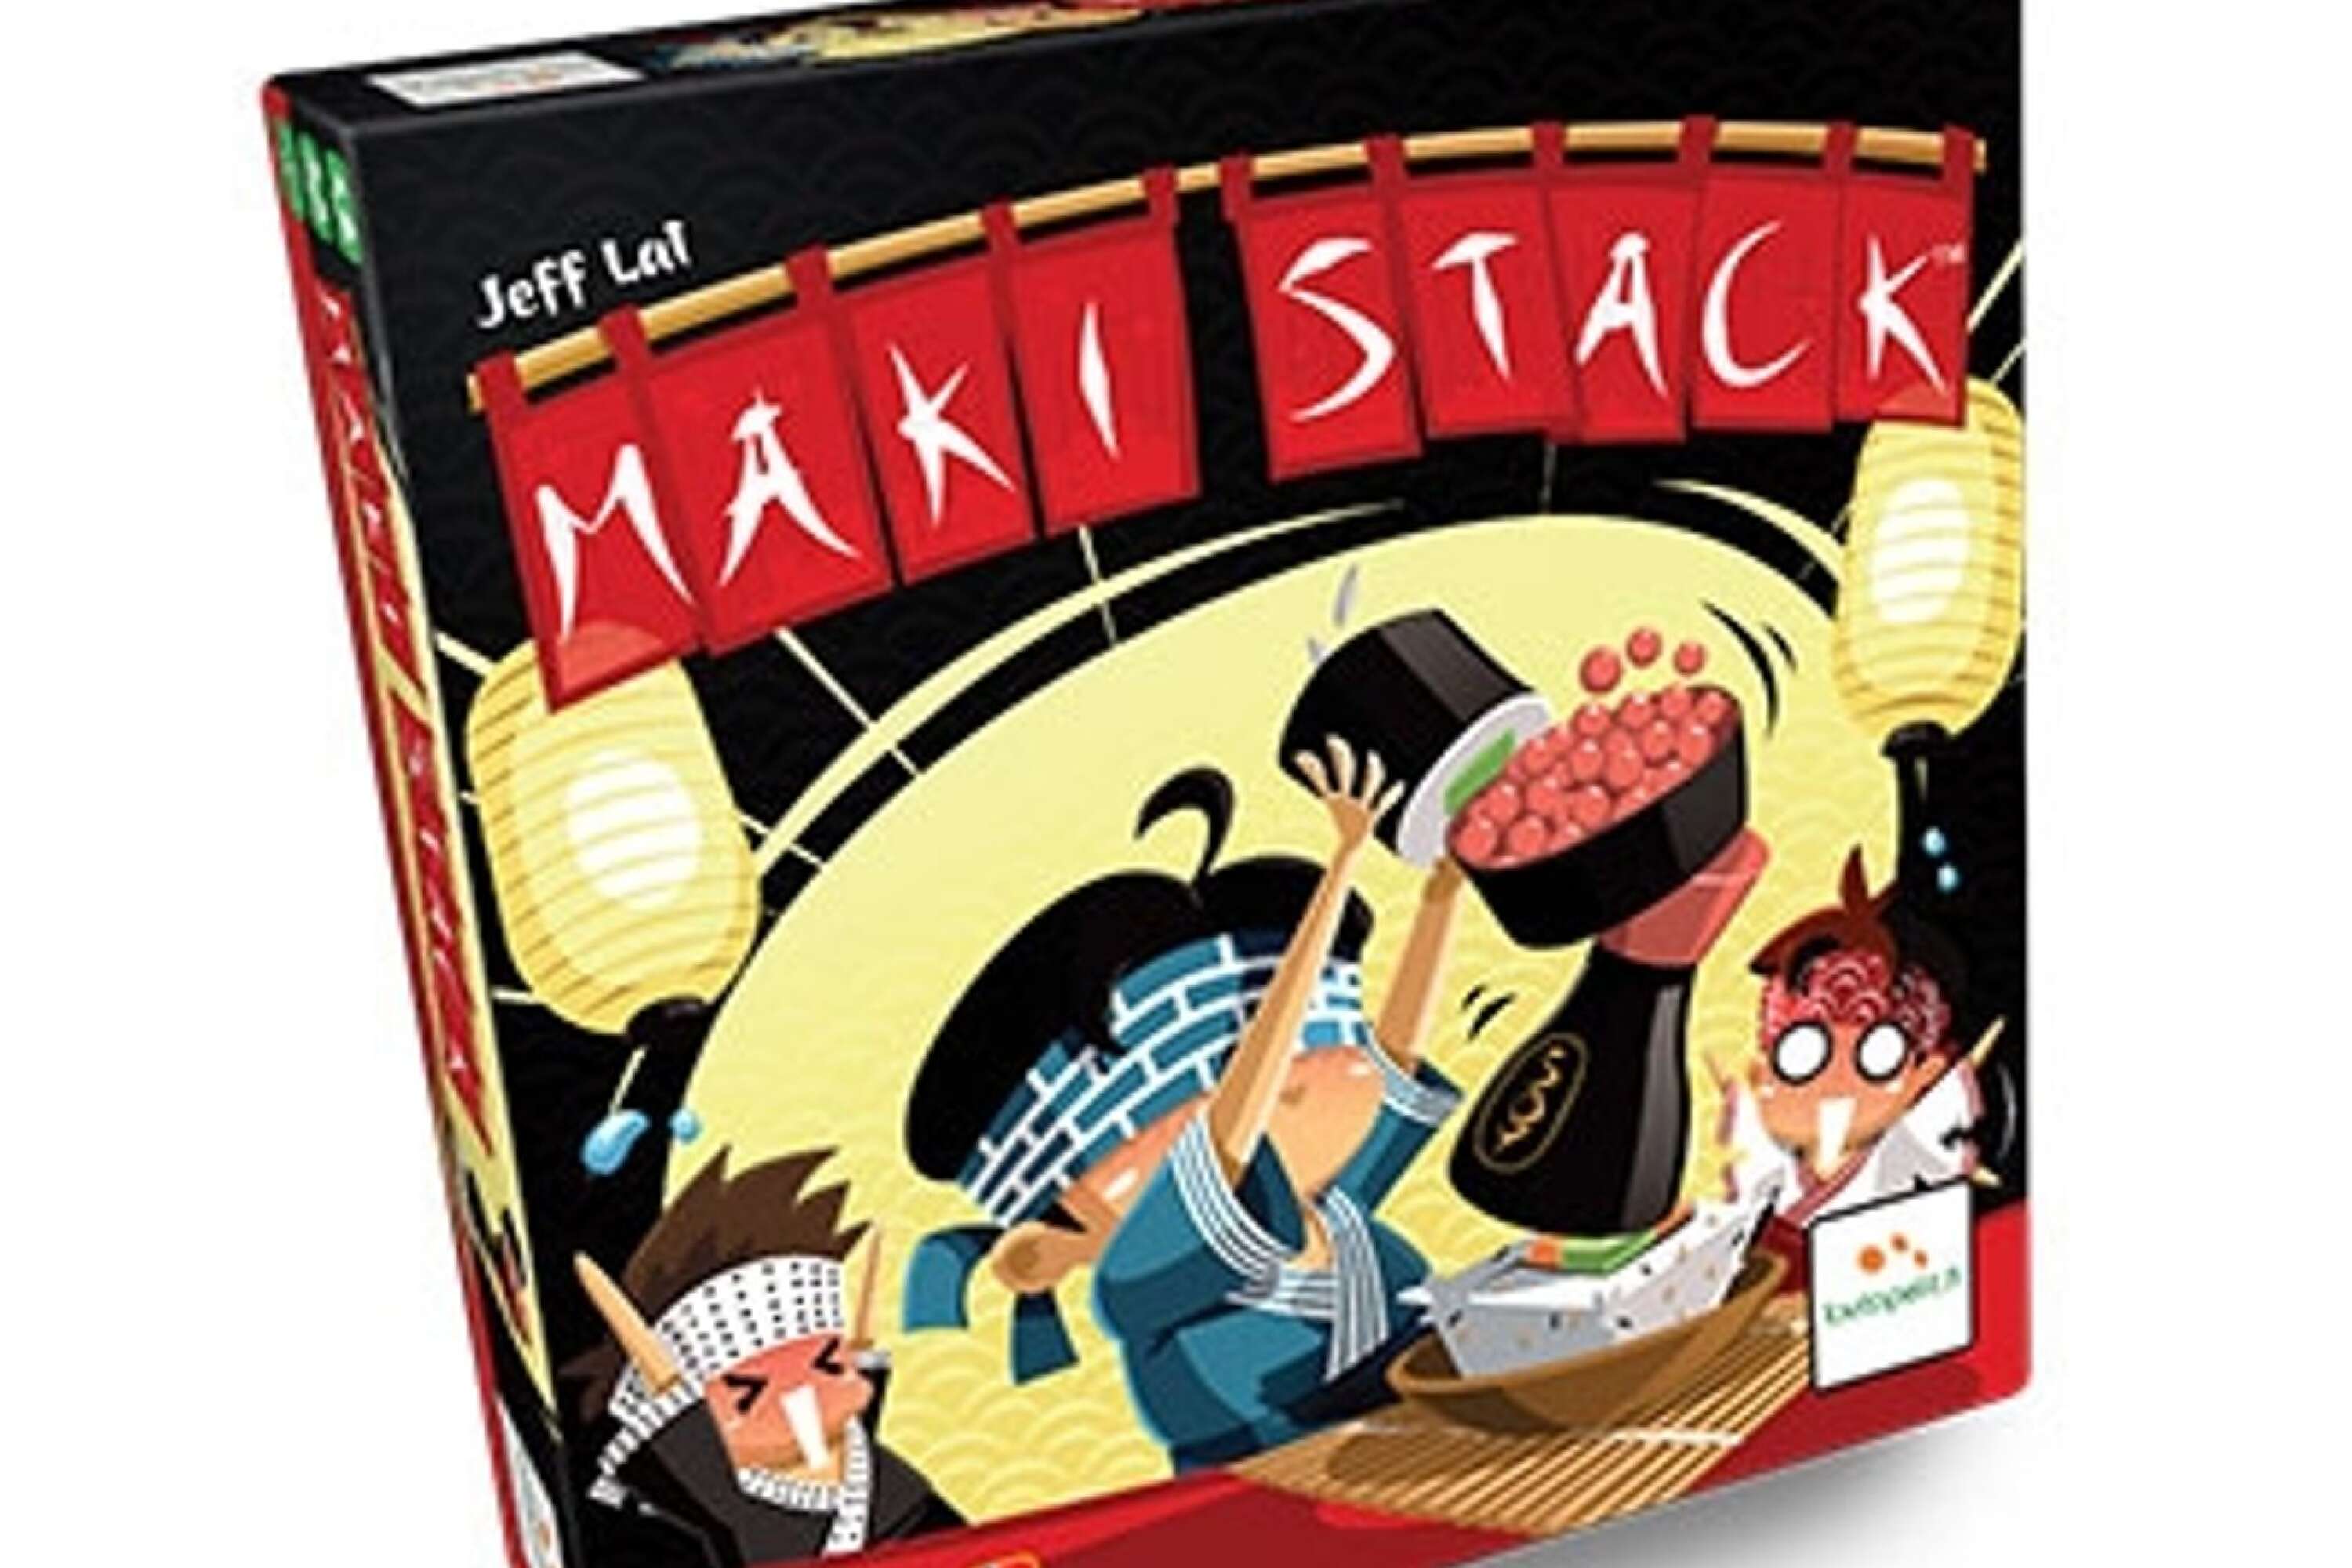 Maki stack